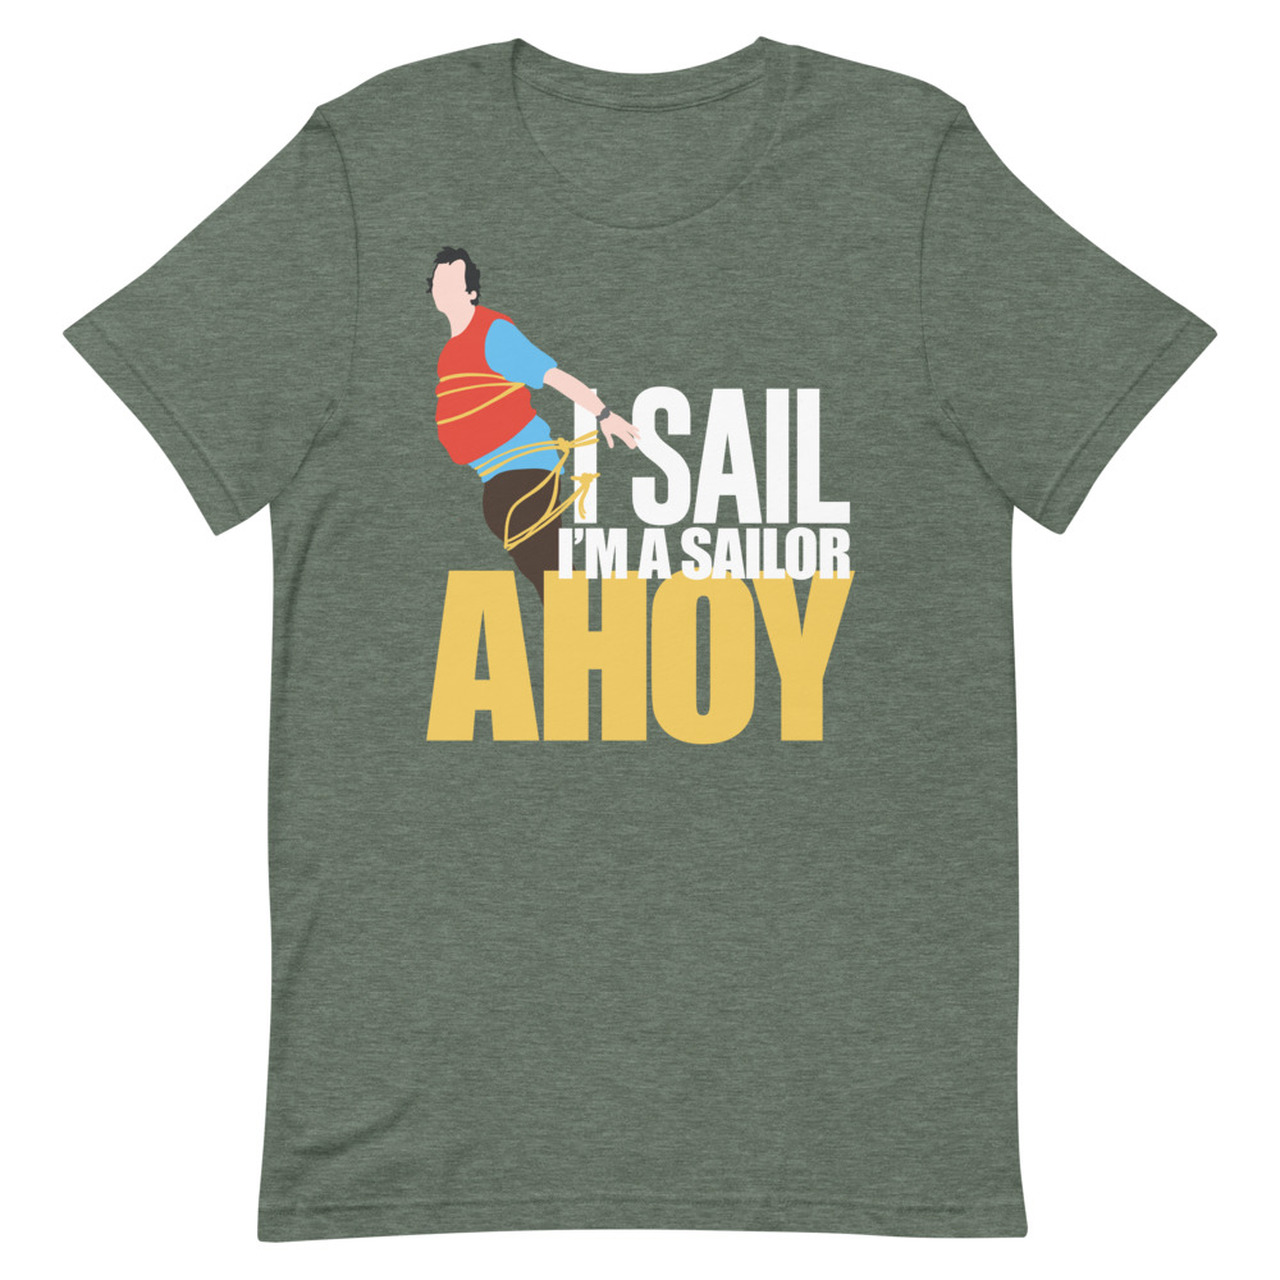 CultSub T-Shirts: What About Bob? Inspired - I Sail! I'm a Sailor! AHOY!" T-Shirt